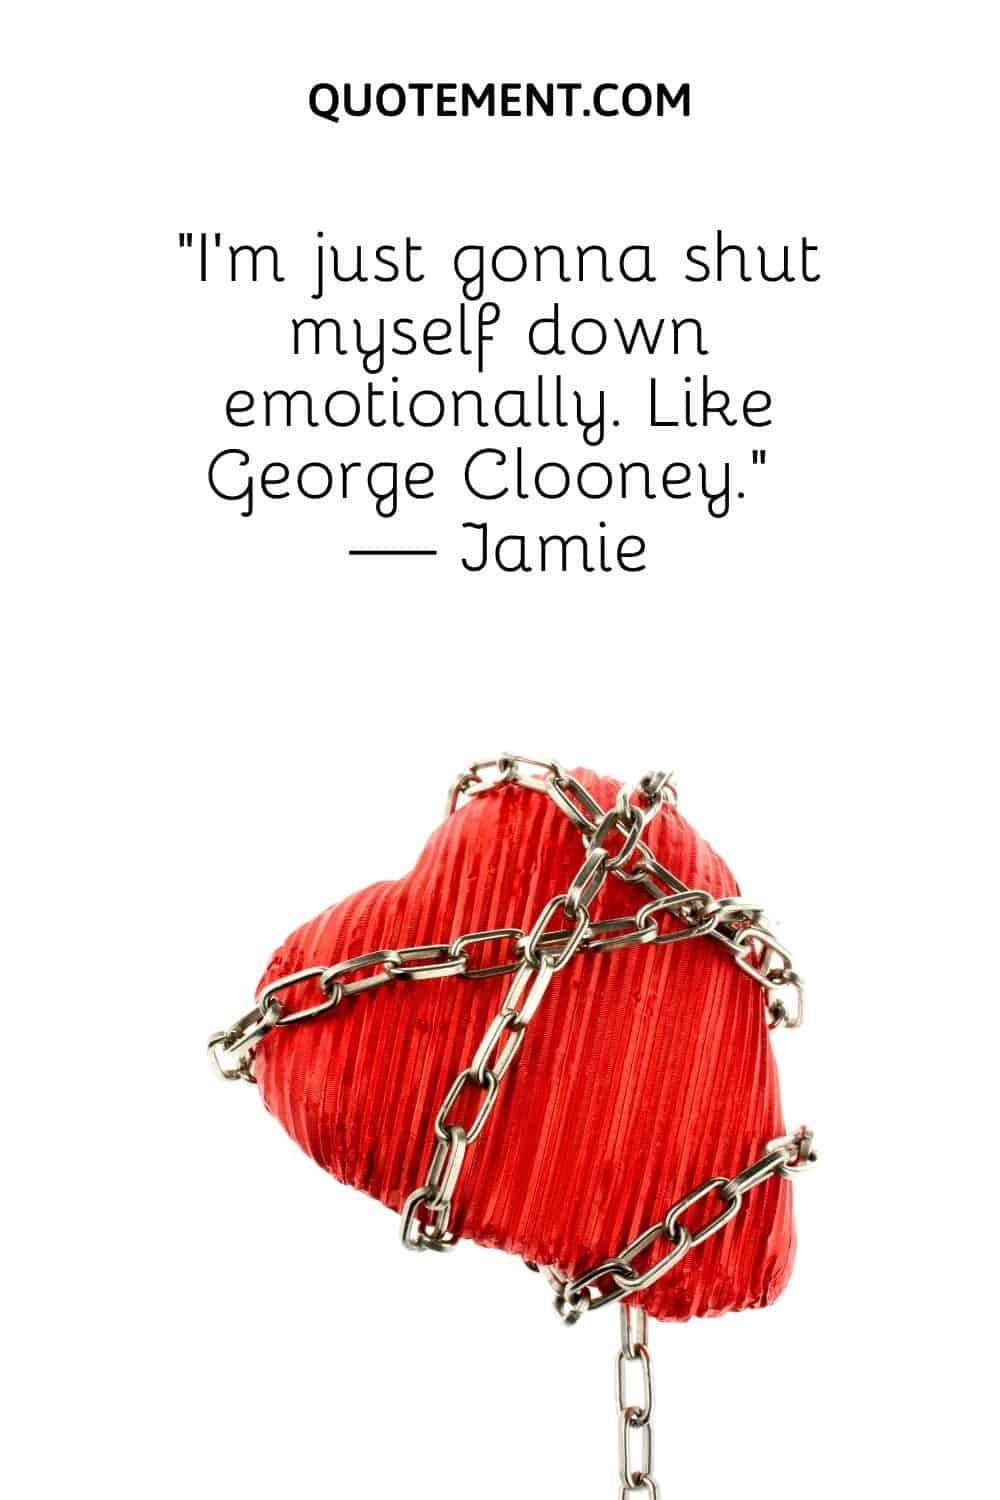 “I’m just gonna shut myself down emotionally. Like George Clooney.” — Jamie